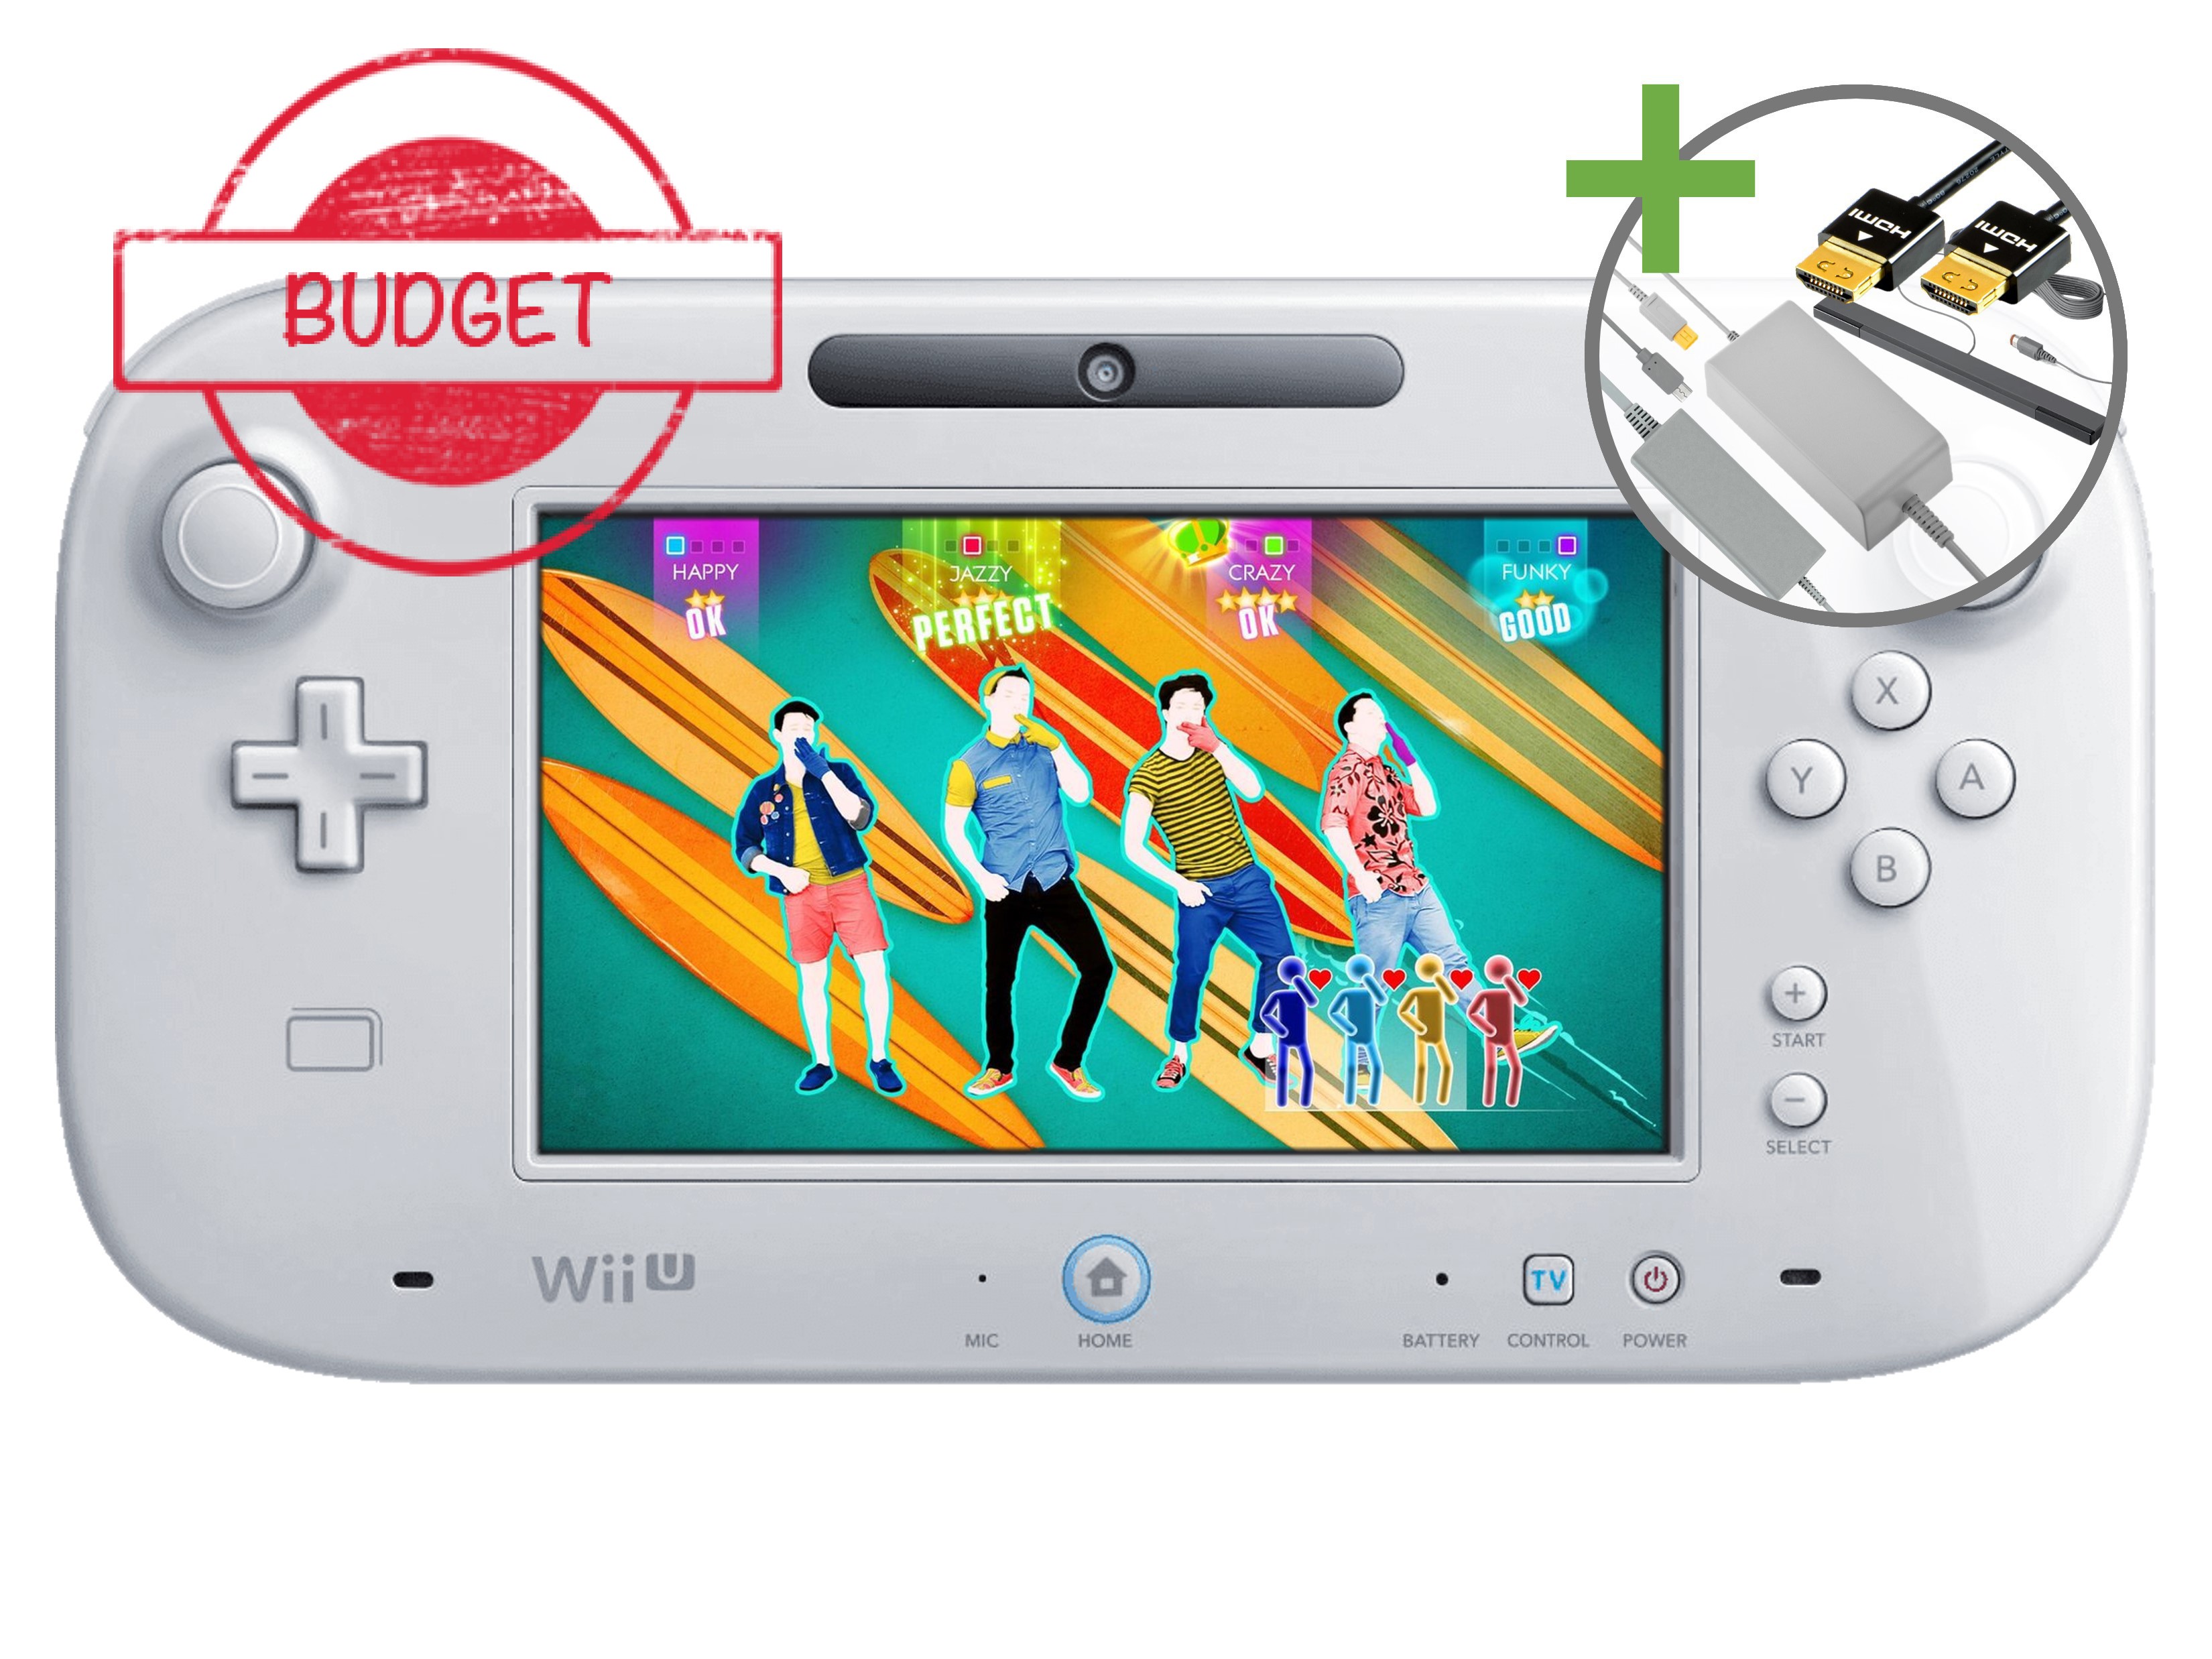 Nintendo Wii U Starter Pack - Just Dance 2014 Edition - Budget - Wii U Hardware - 2